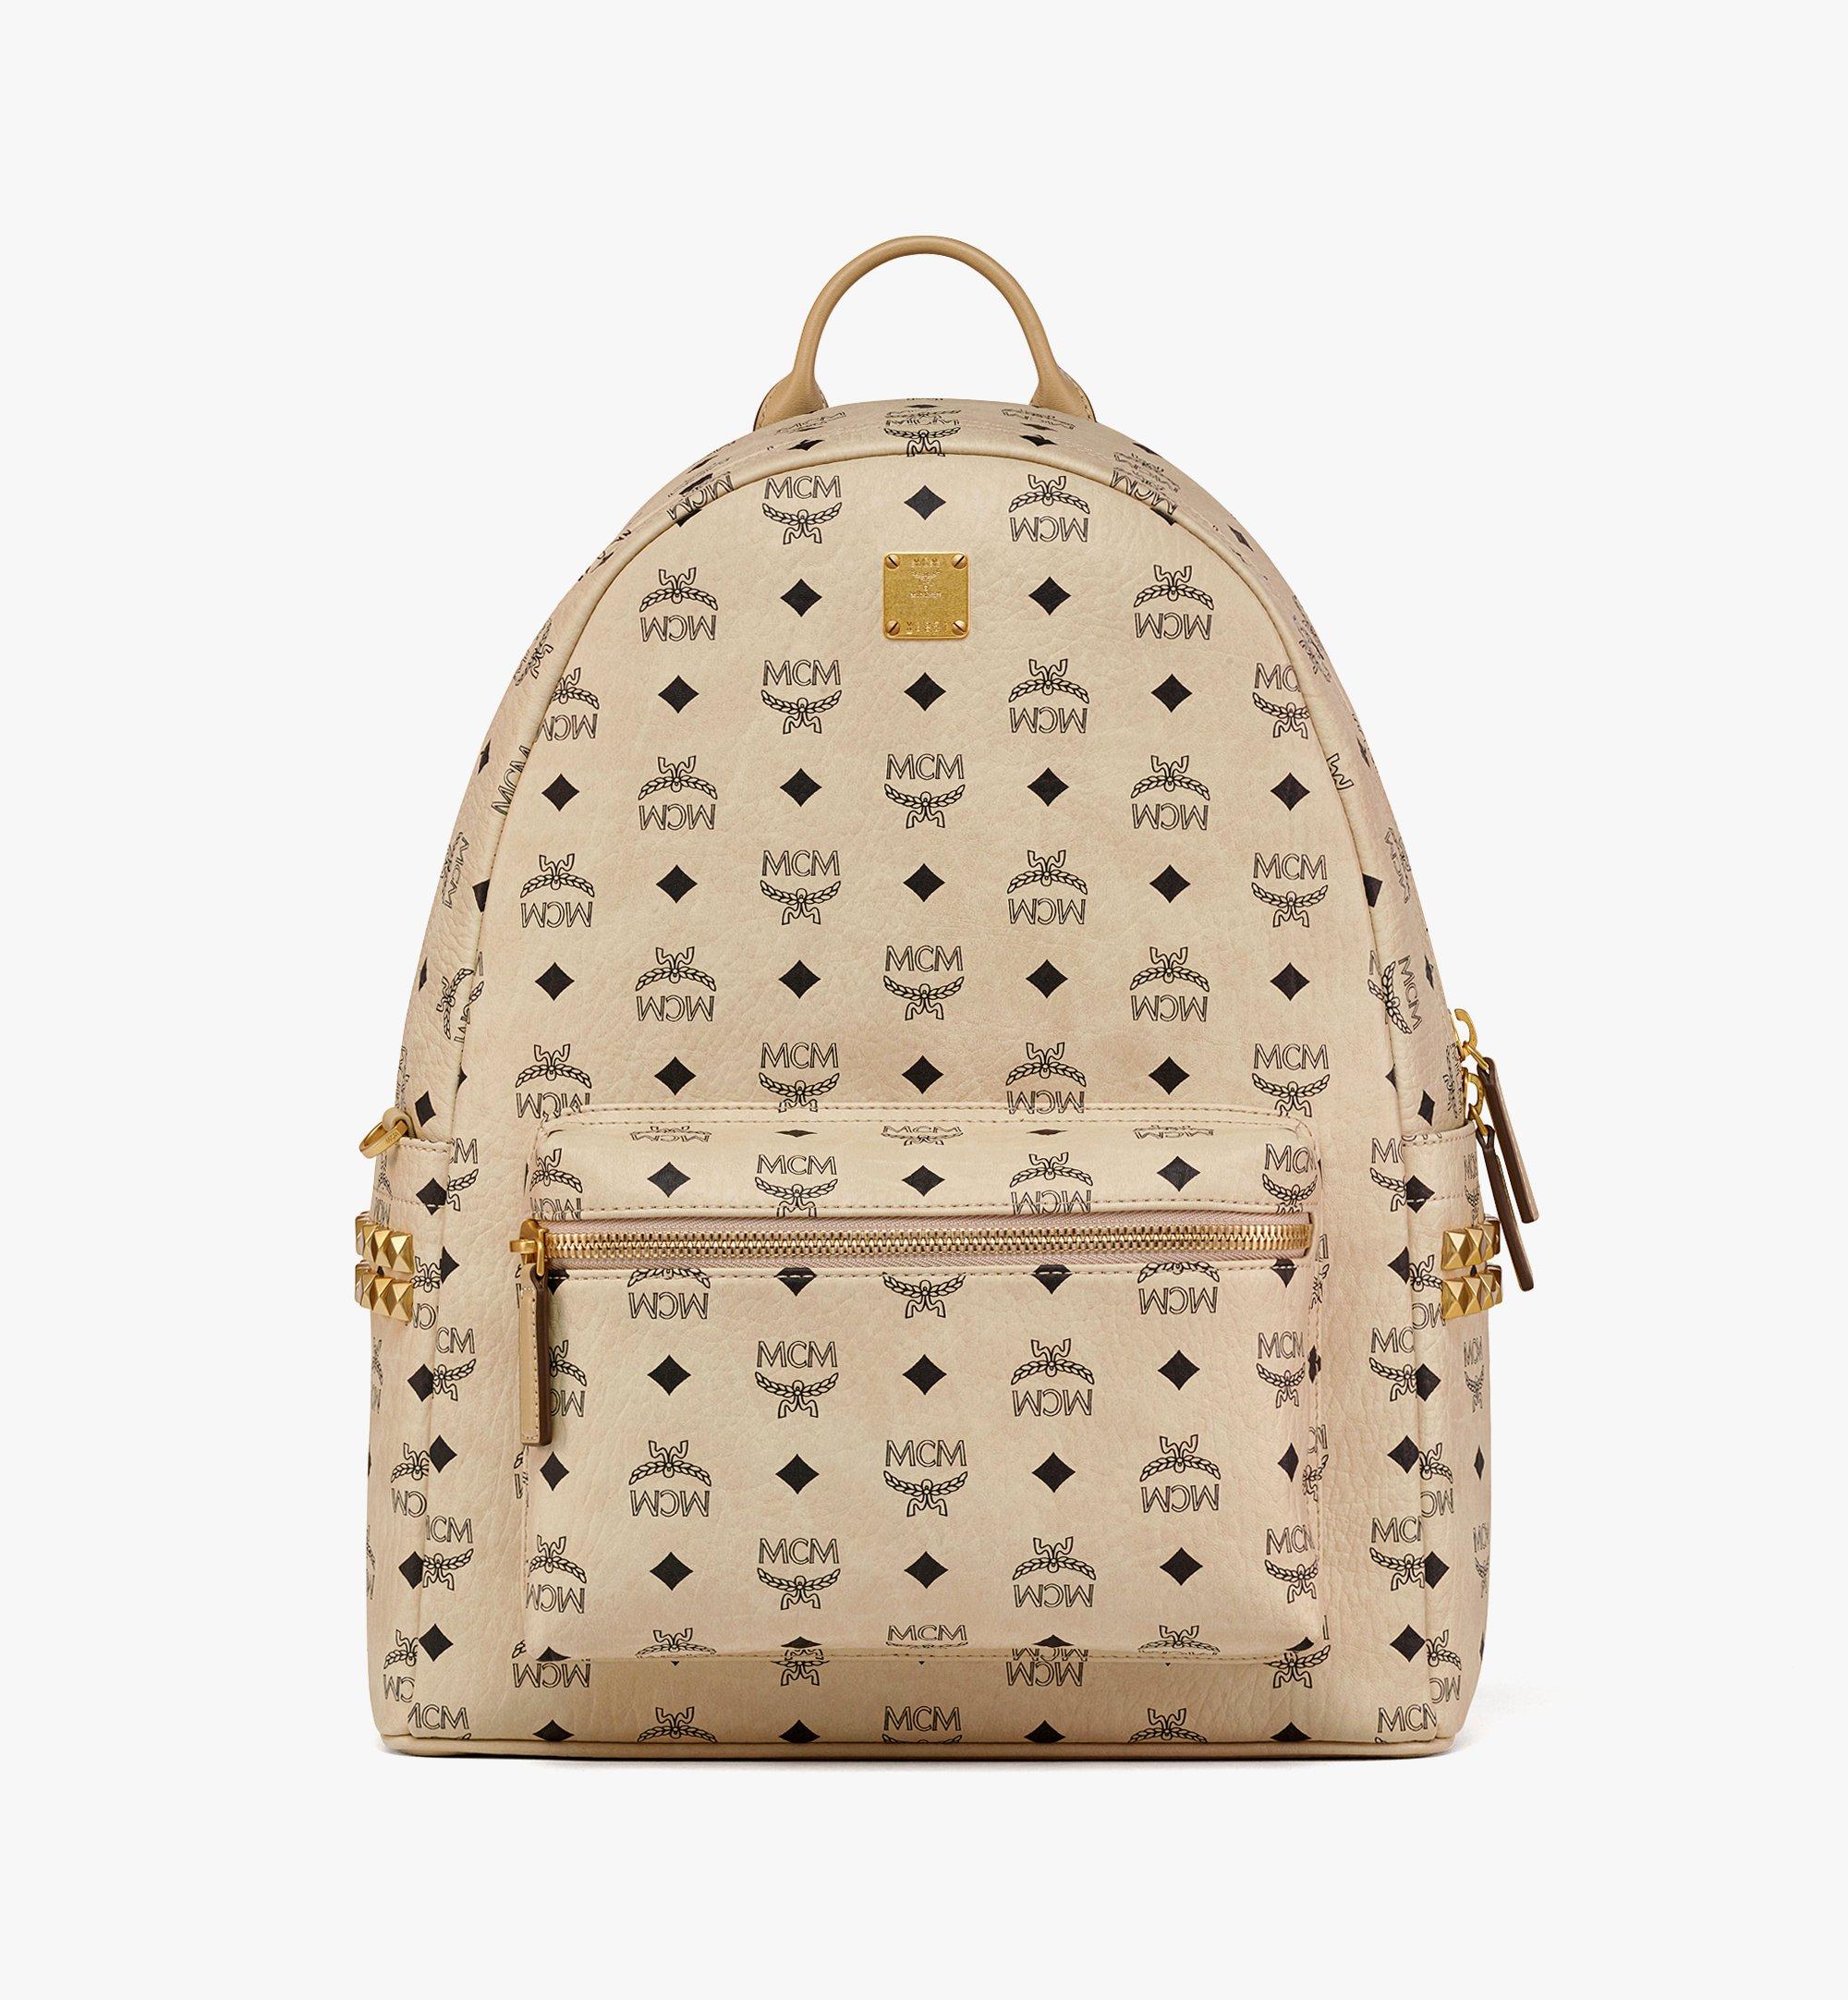 Mcm BackPack  Mcm backpack, Backpacks, Fashion backpack